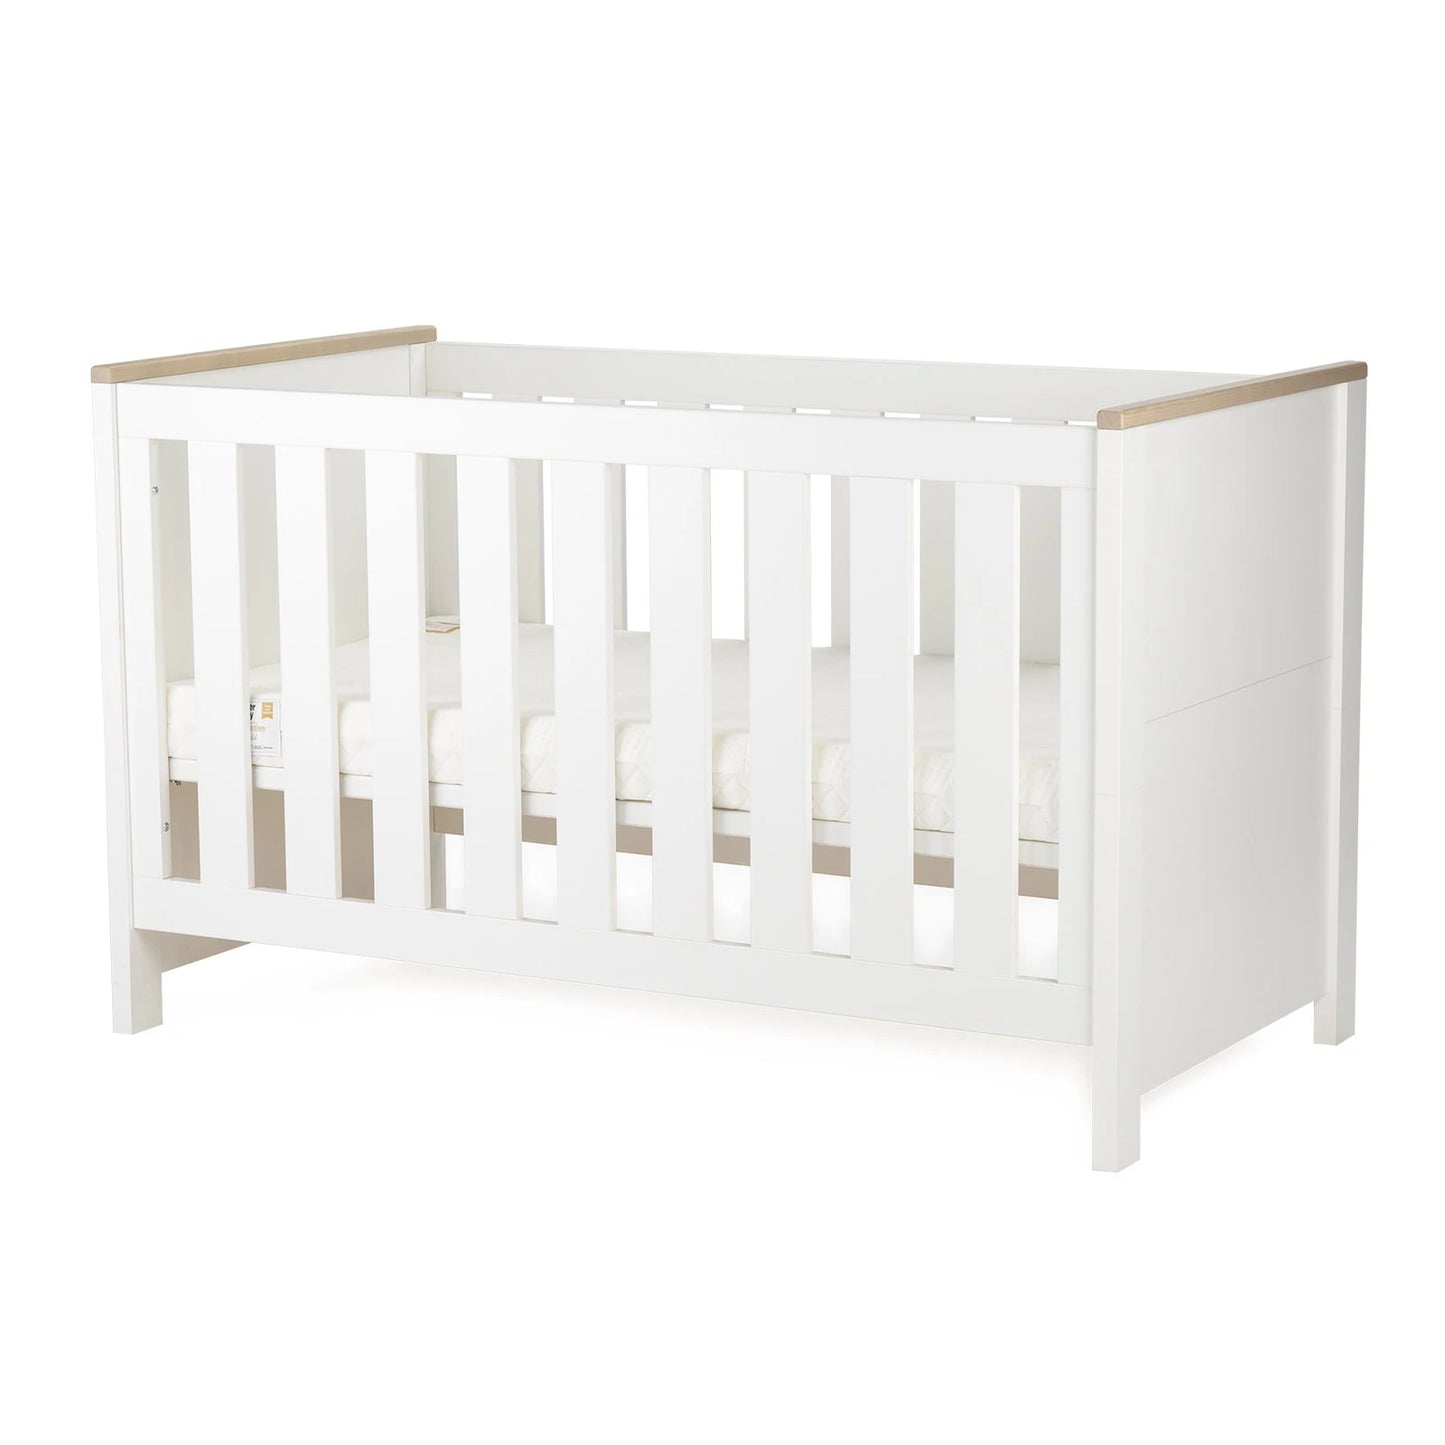 Cuddle Co Luna 3 Piece Nursery Furniture Set (Cot Bed, Dresser & Wardrobe) - White & Oak